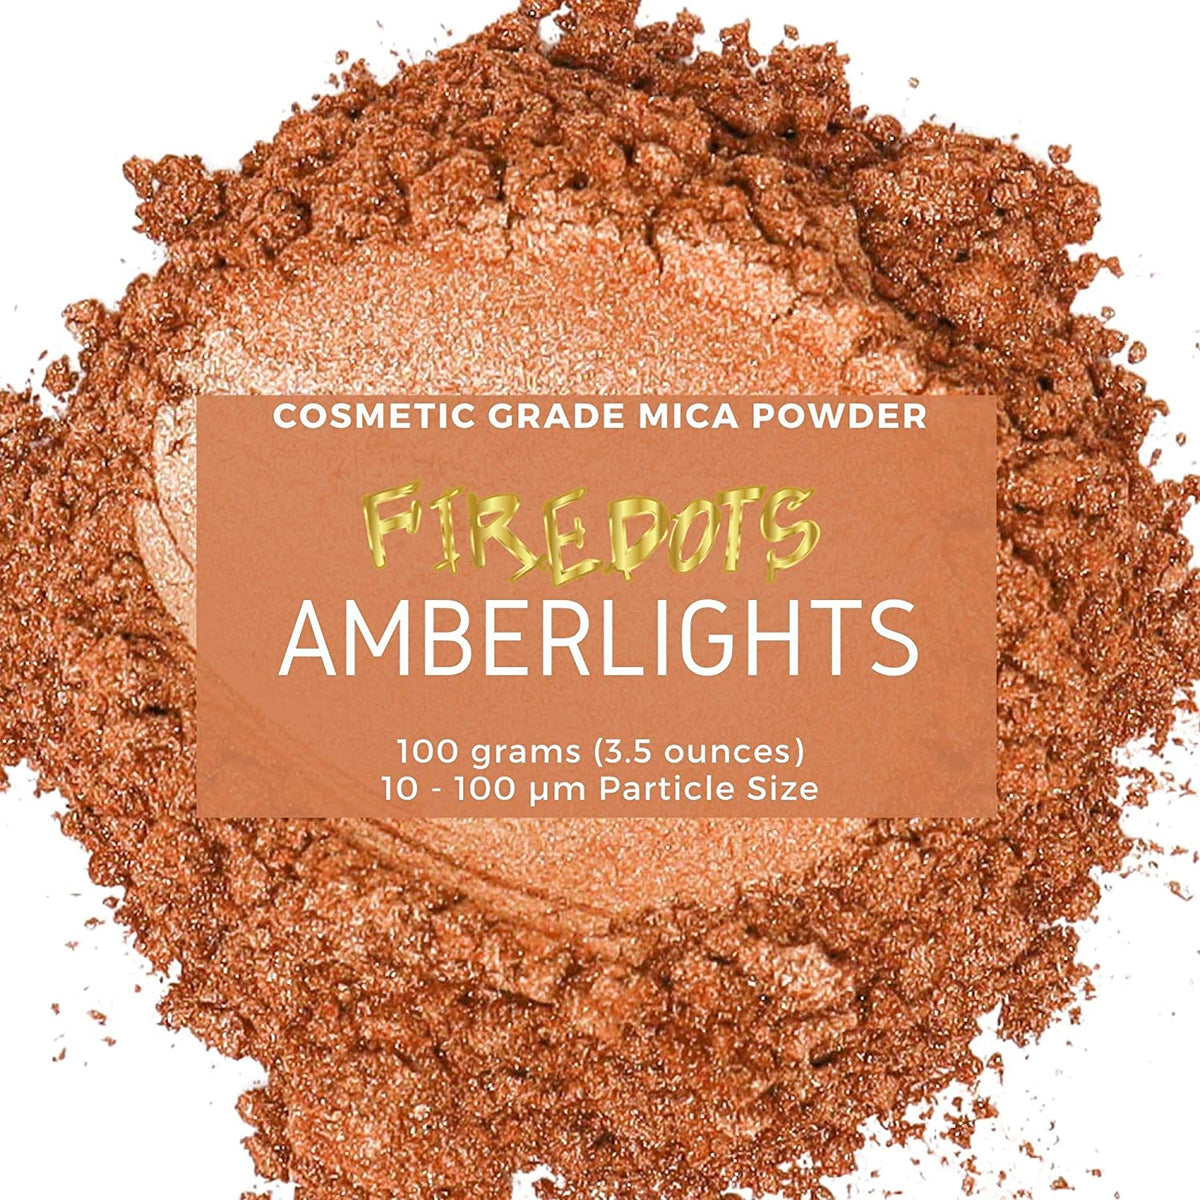 Amberlights Mica Powder